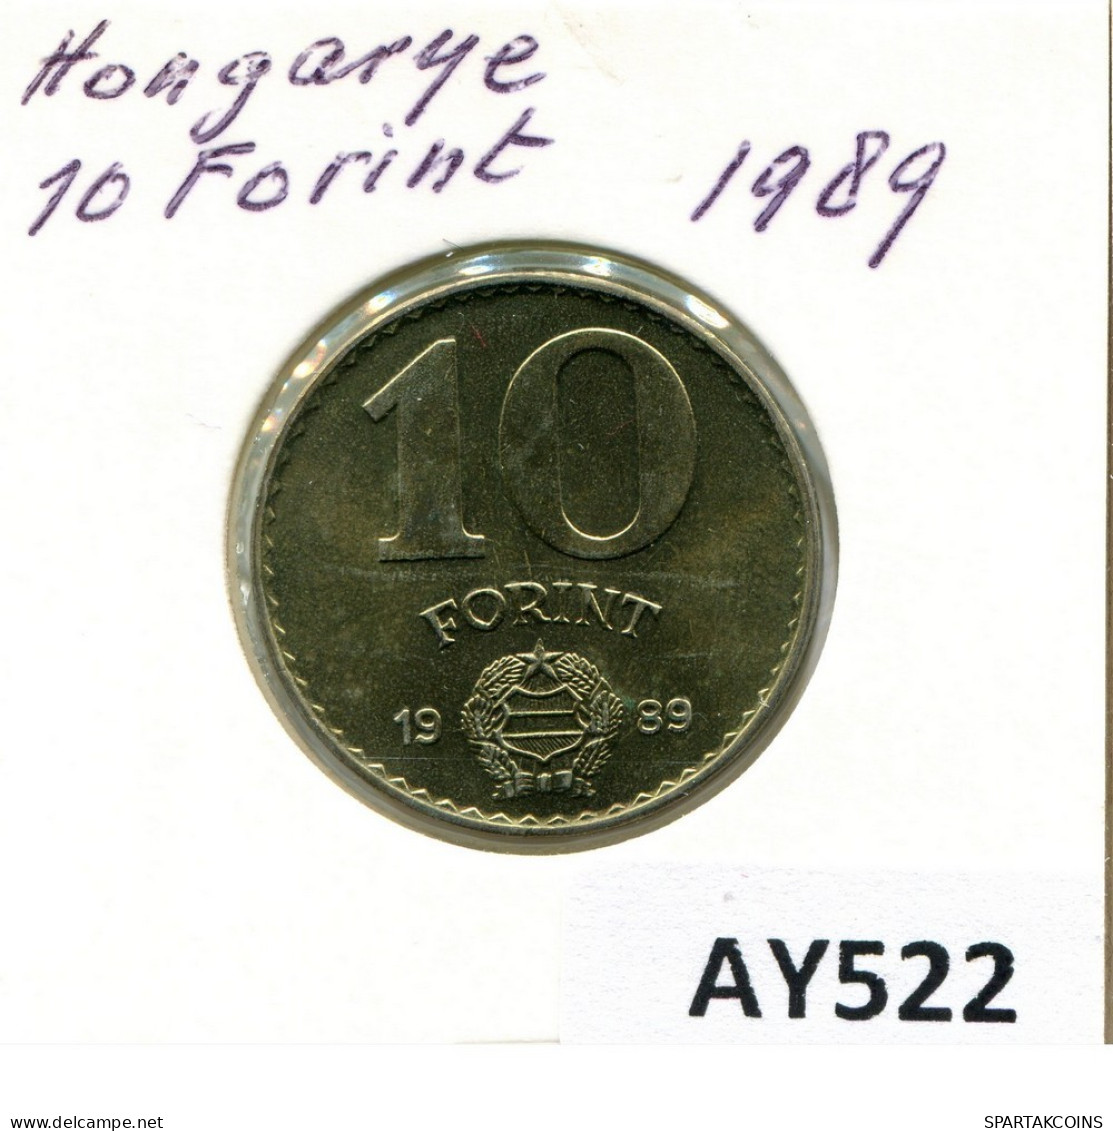 10 FORINT 1989 HUNGARY Coin #AY522.U.A - Hungary